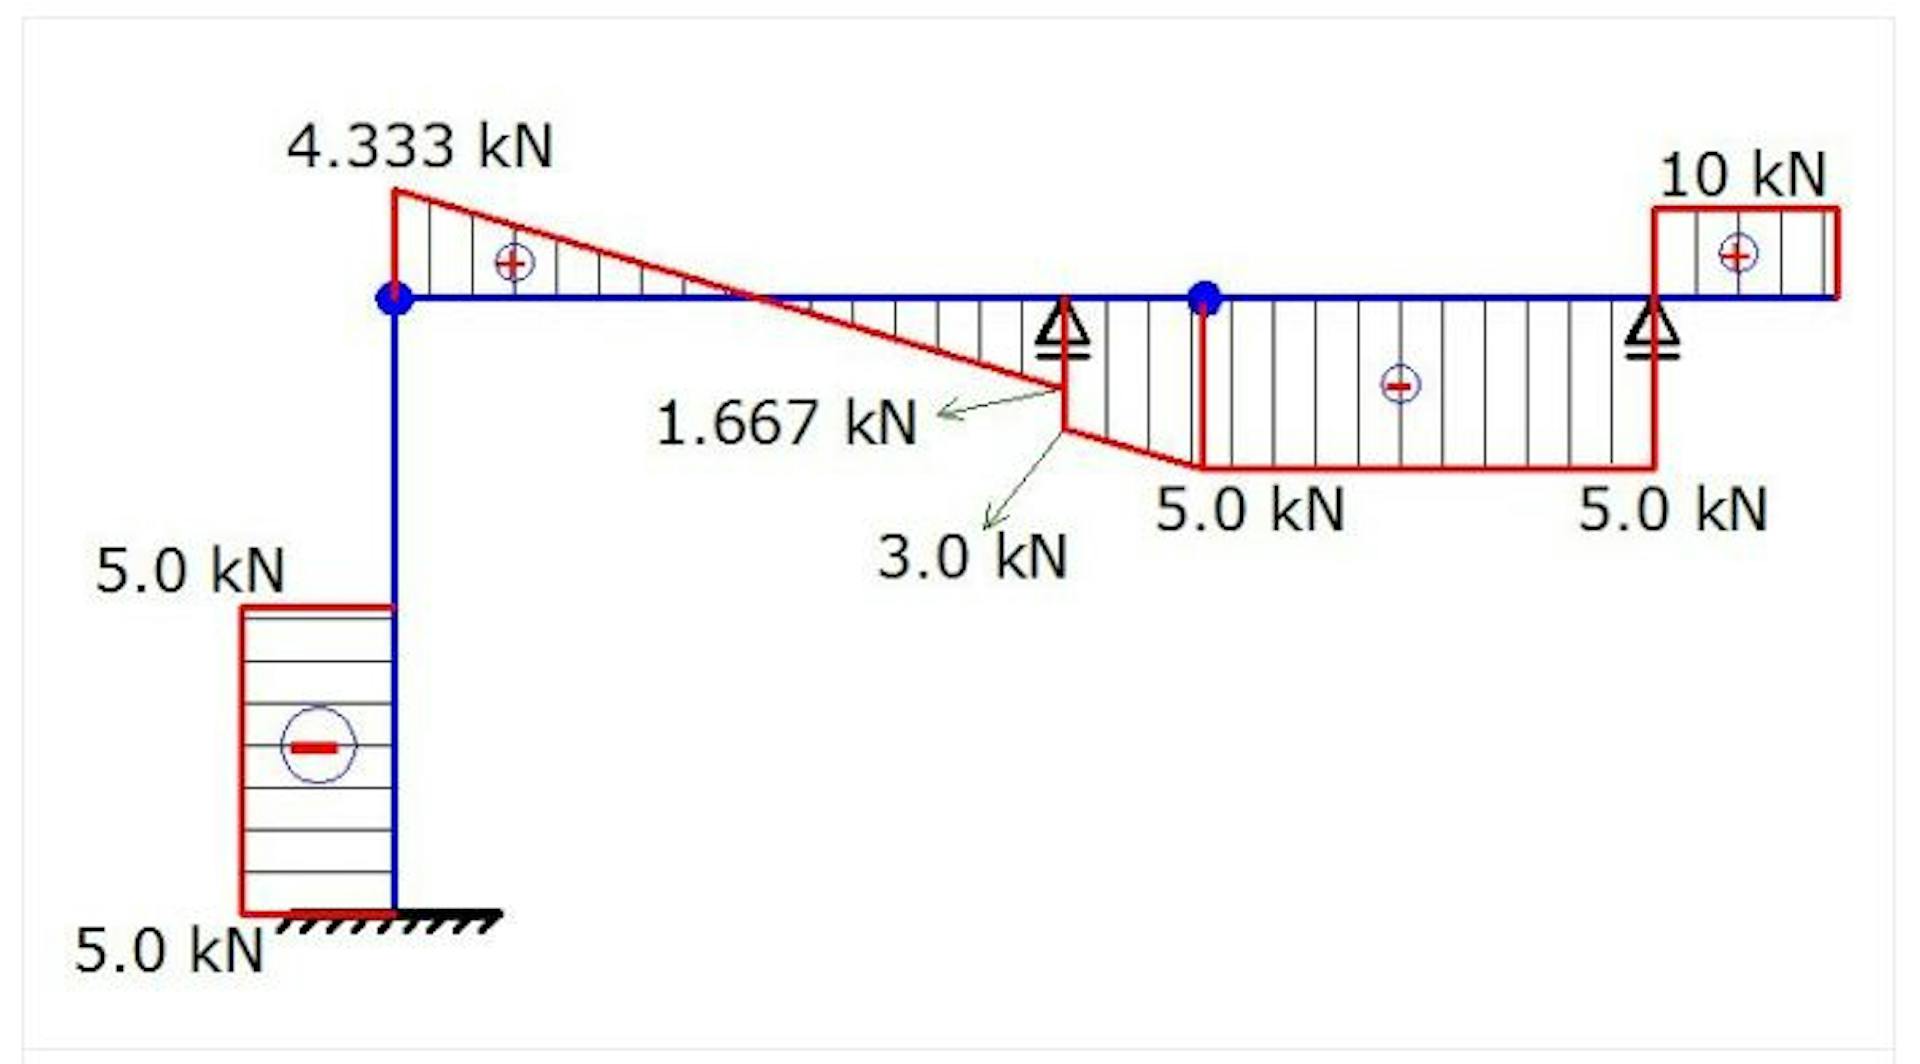 shear force diagram from structville website